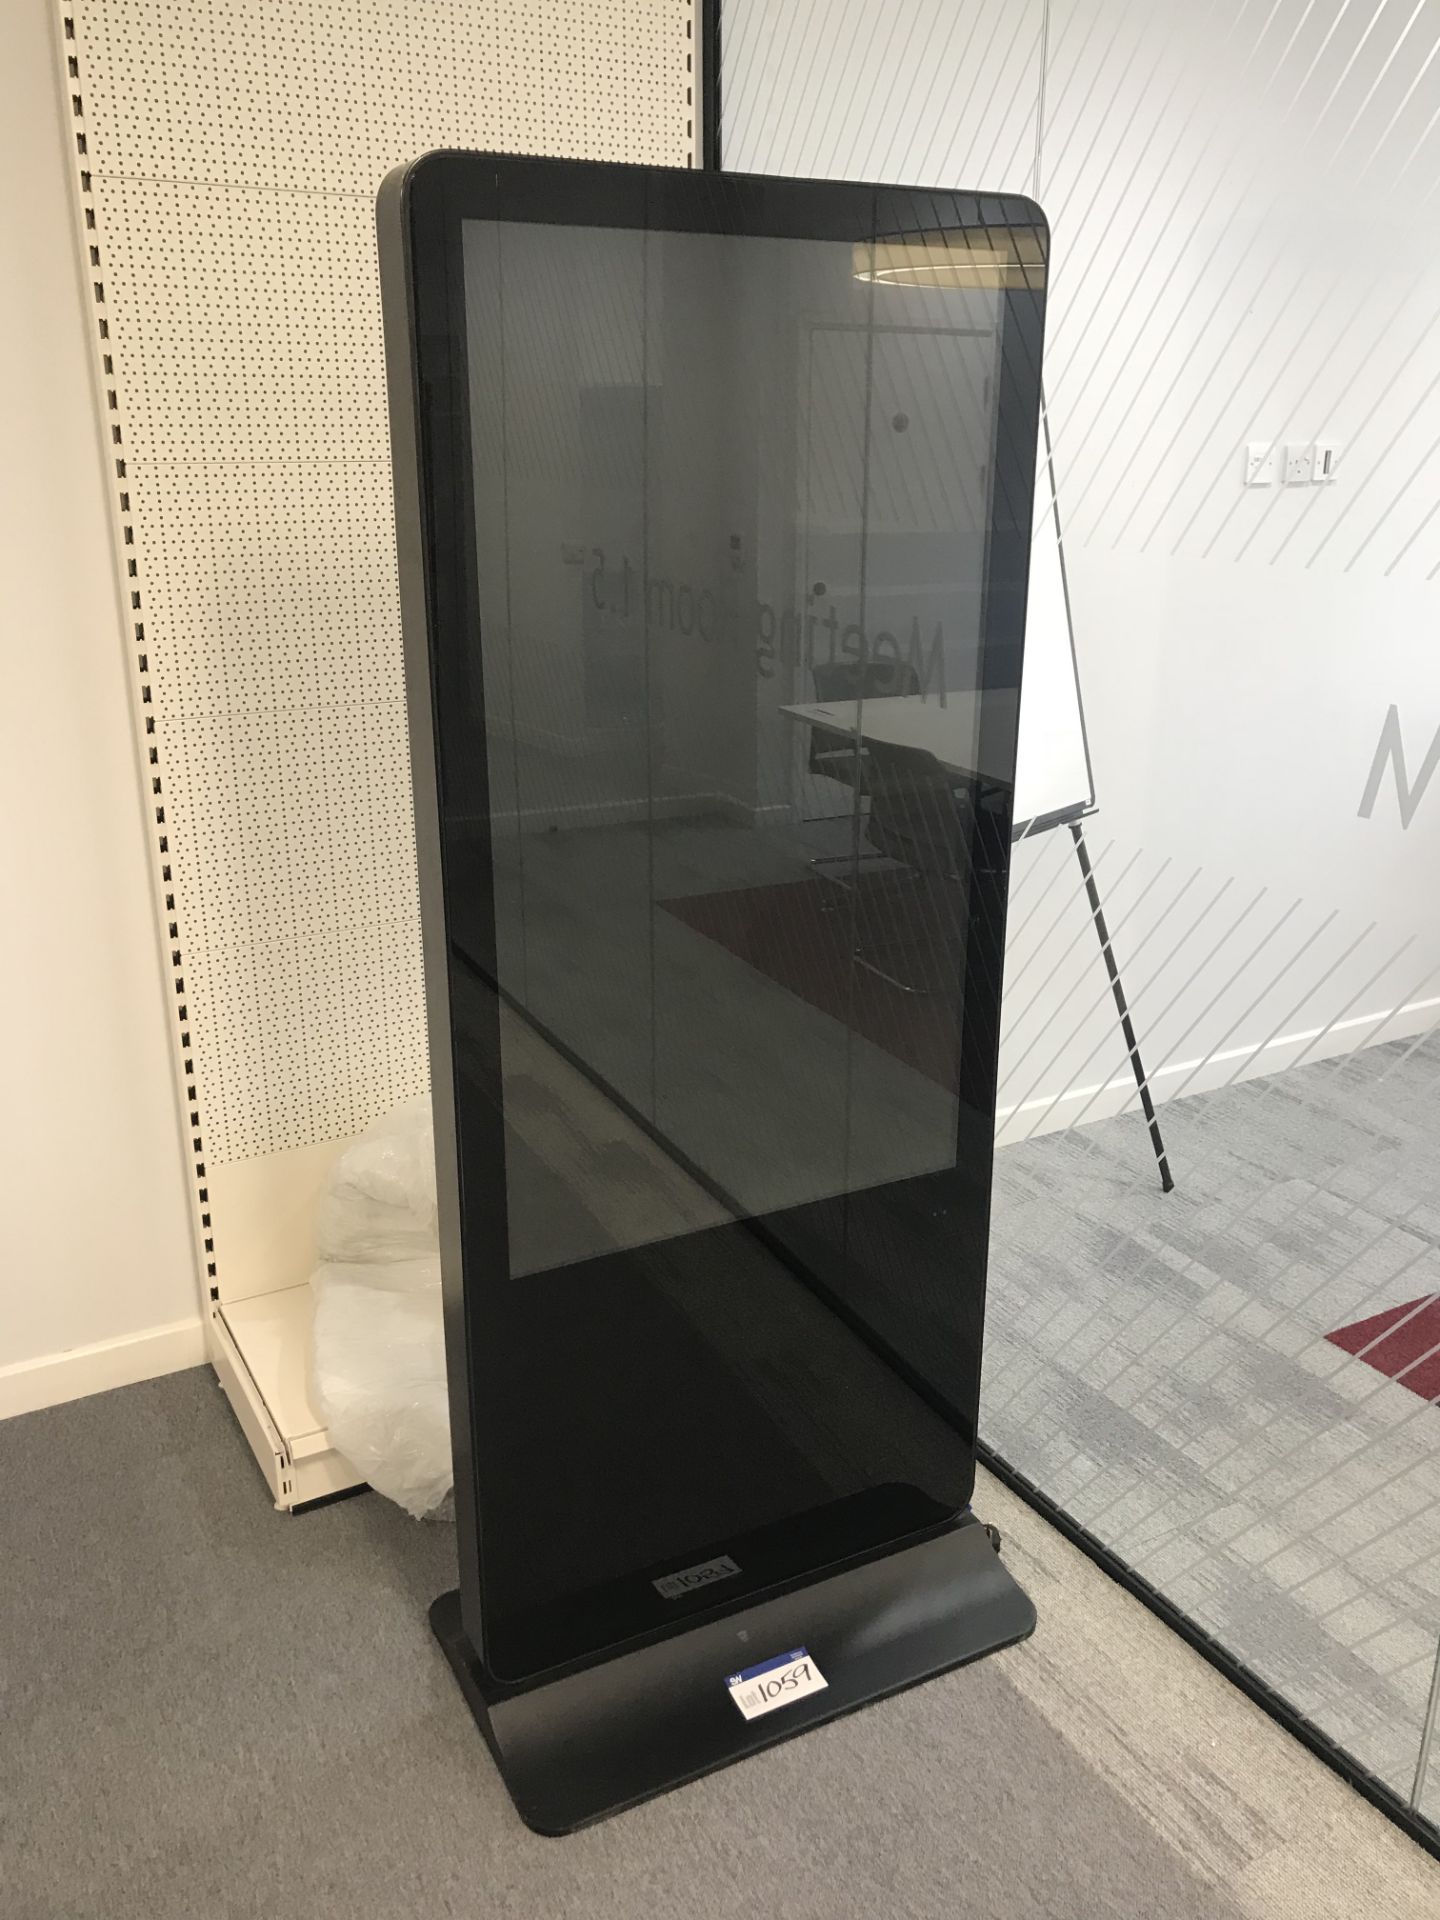 Upright Digital Display Stand (240v)